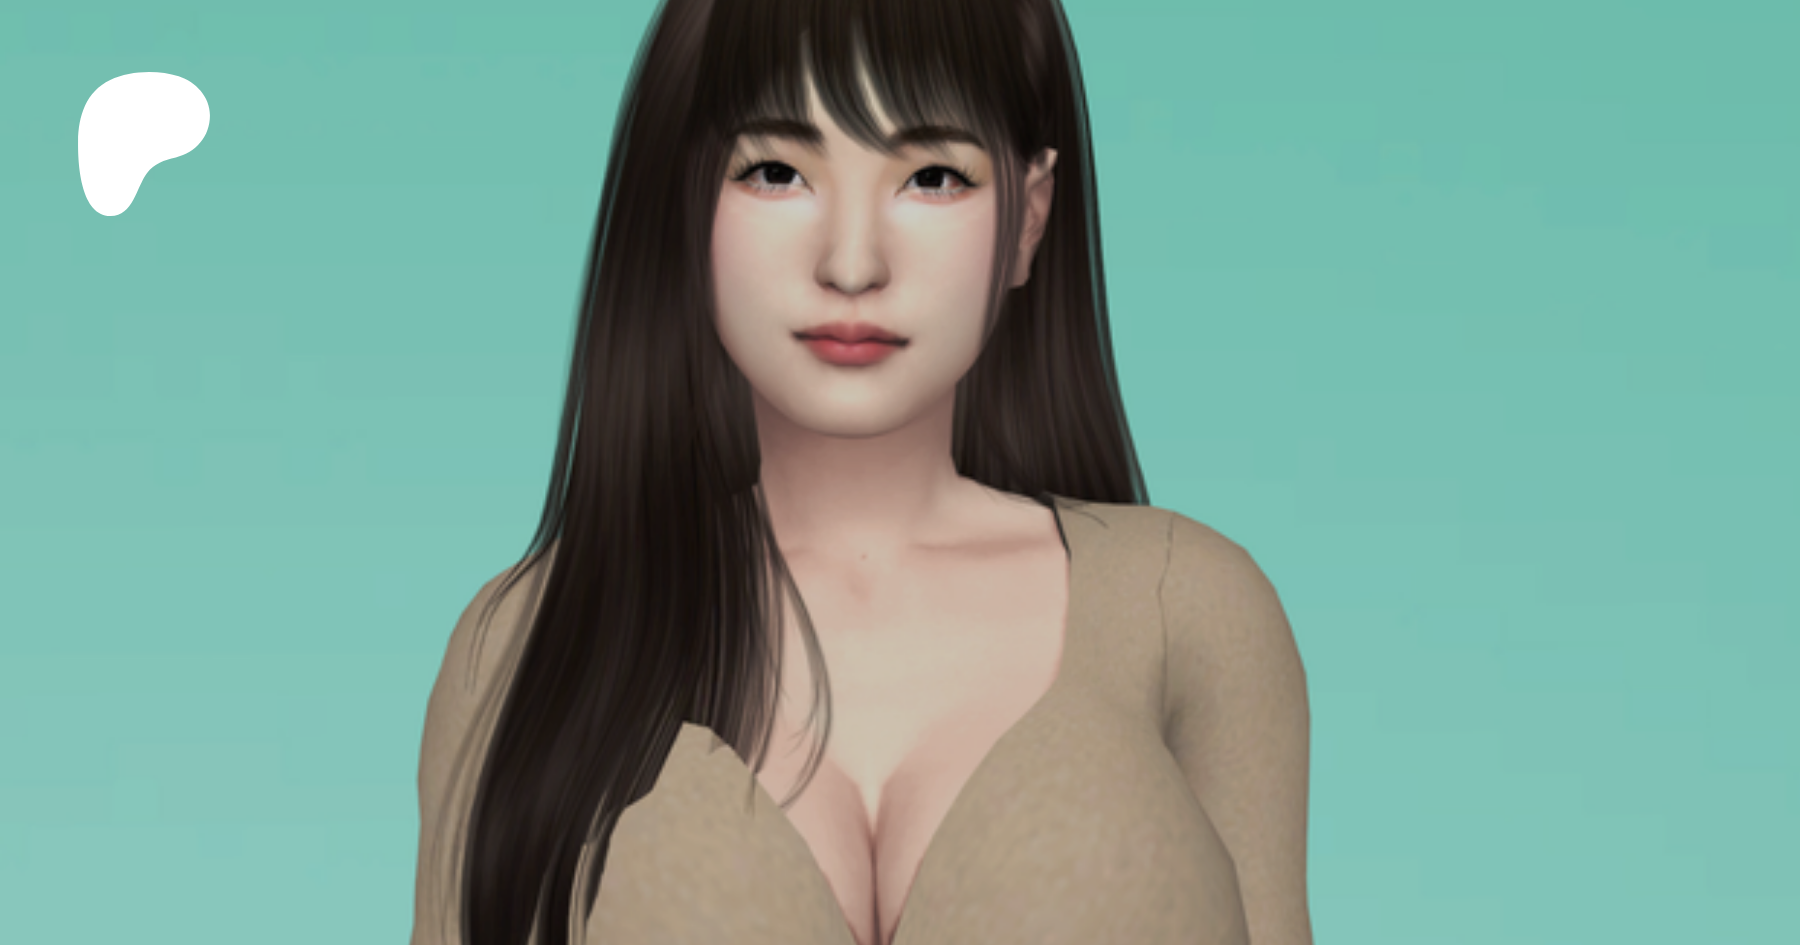 Sims 4 CAS: Washio Mei (鷲尾めい) | Patreon